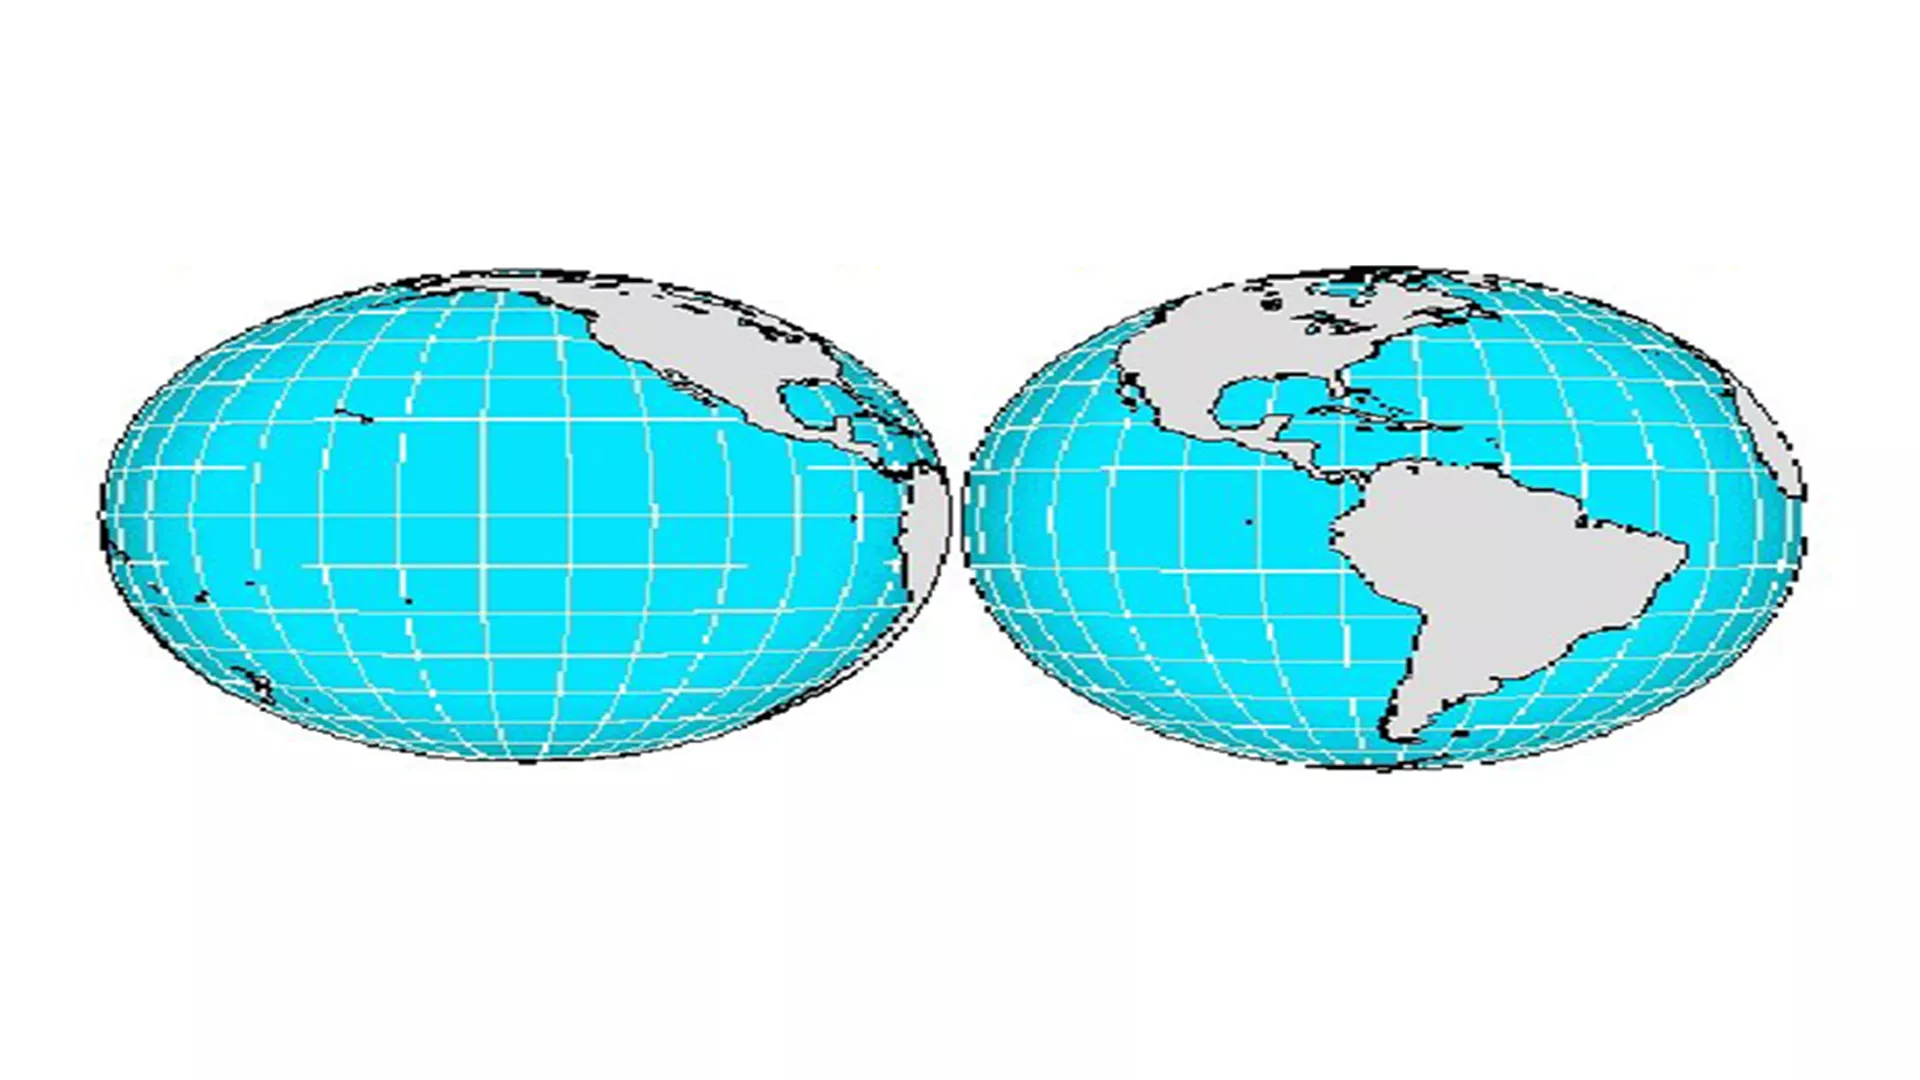 Image of both hemispheres of the earth.